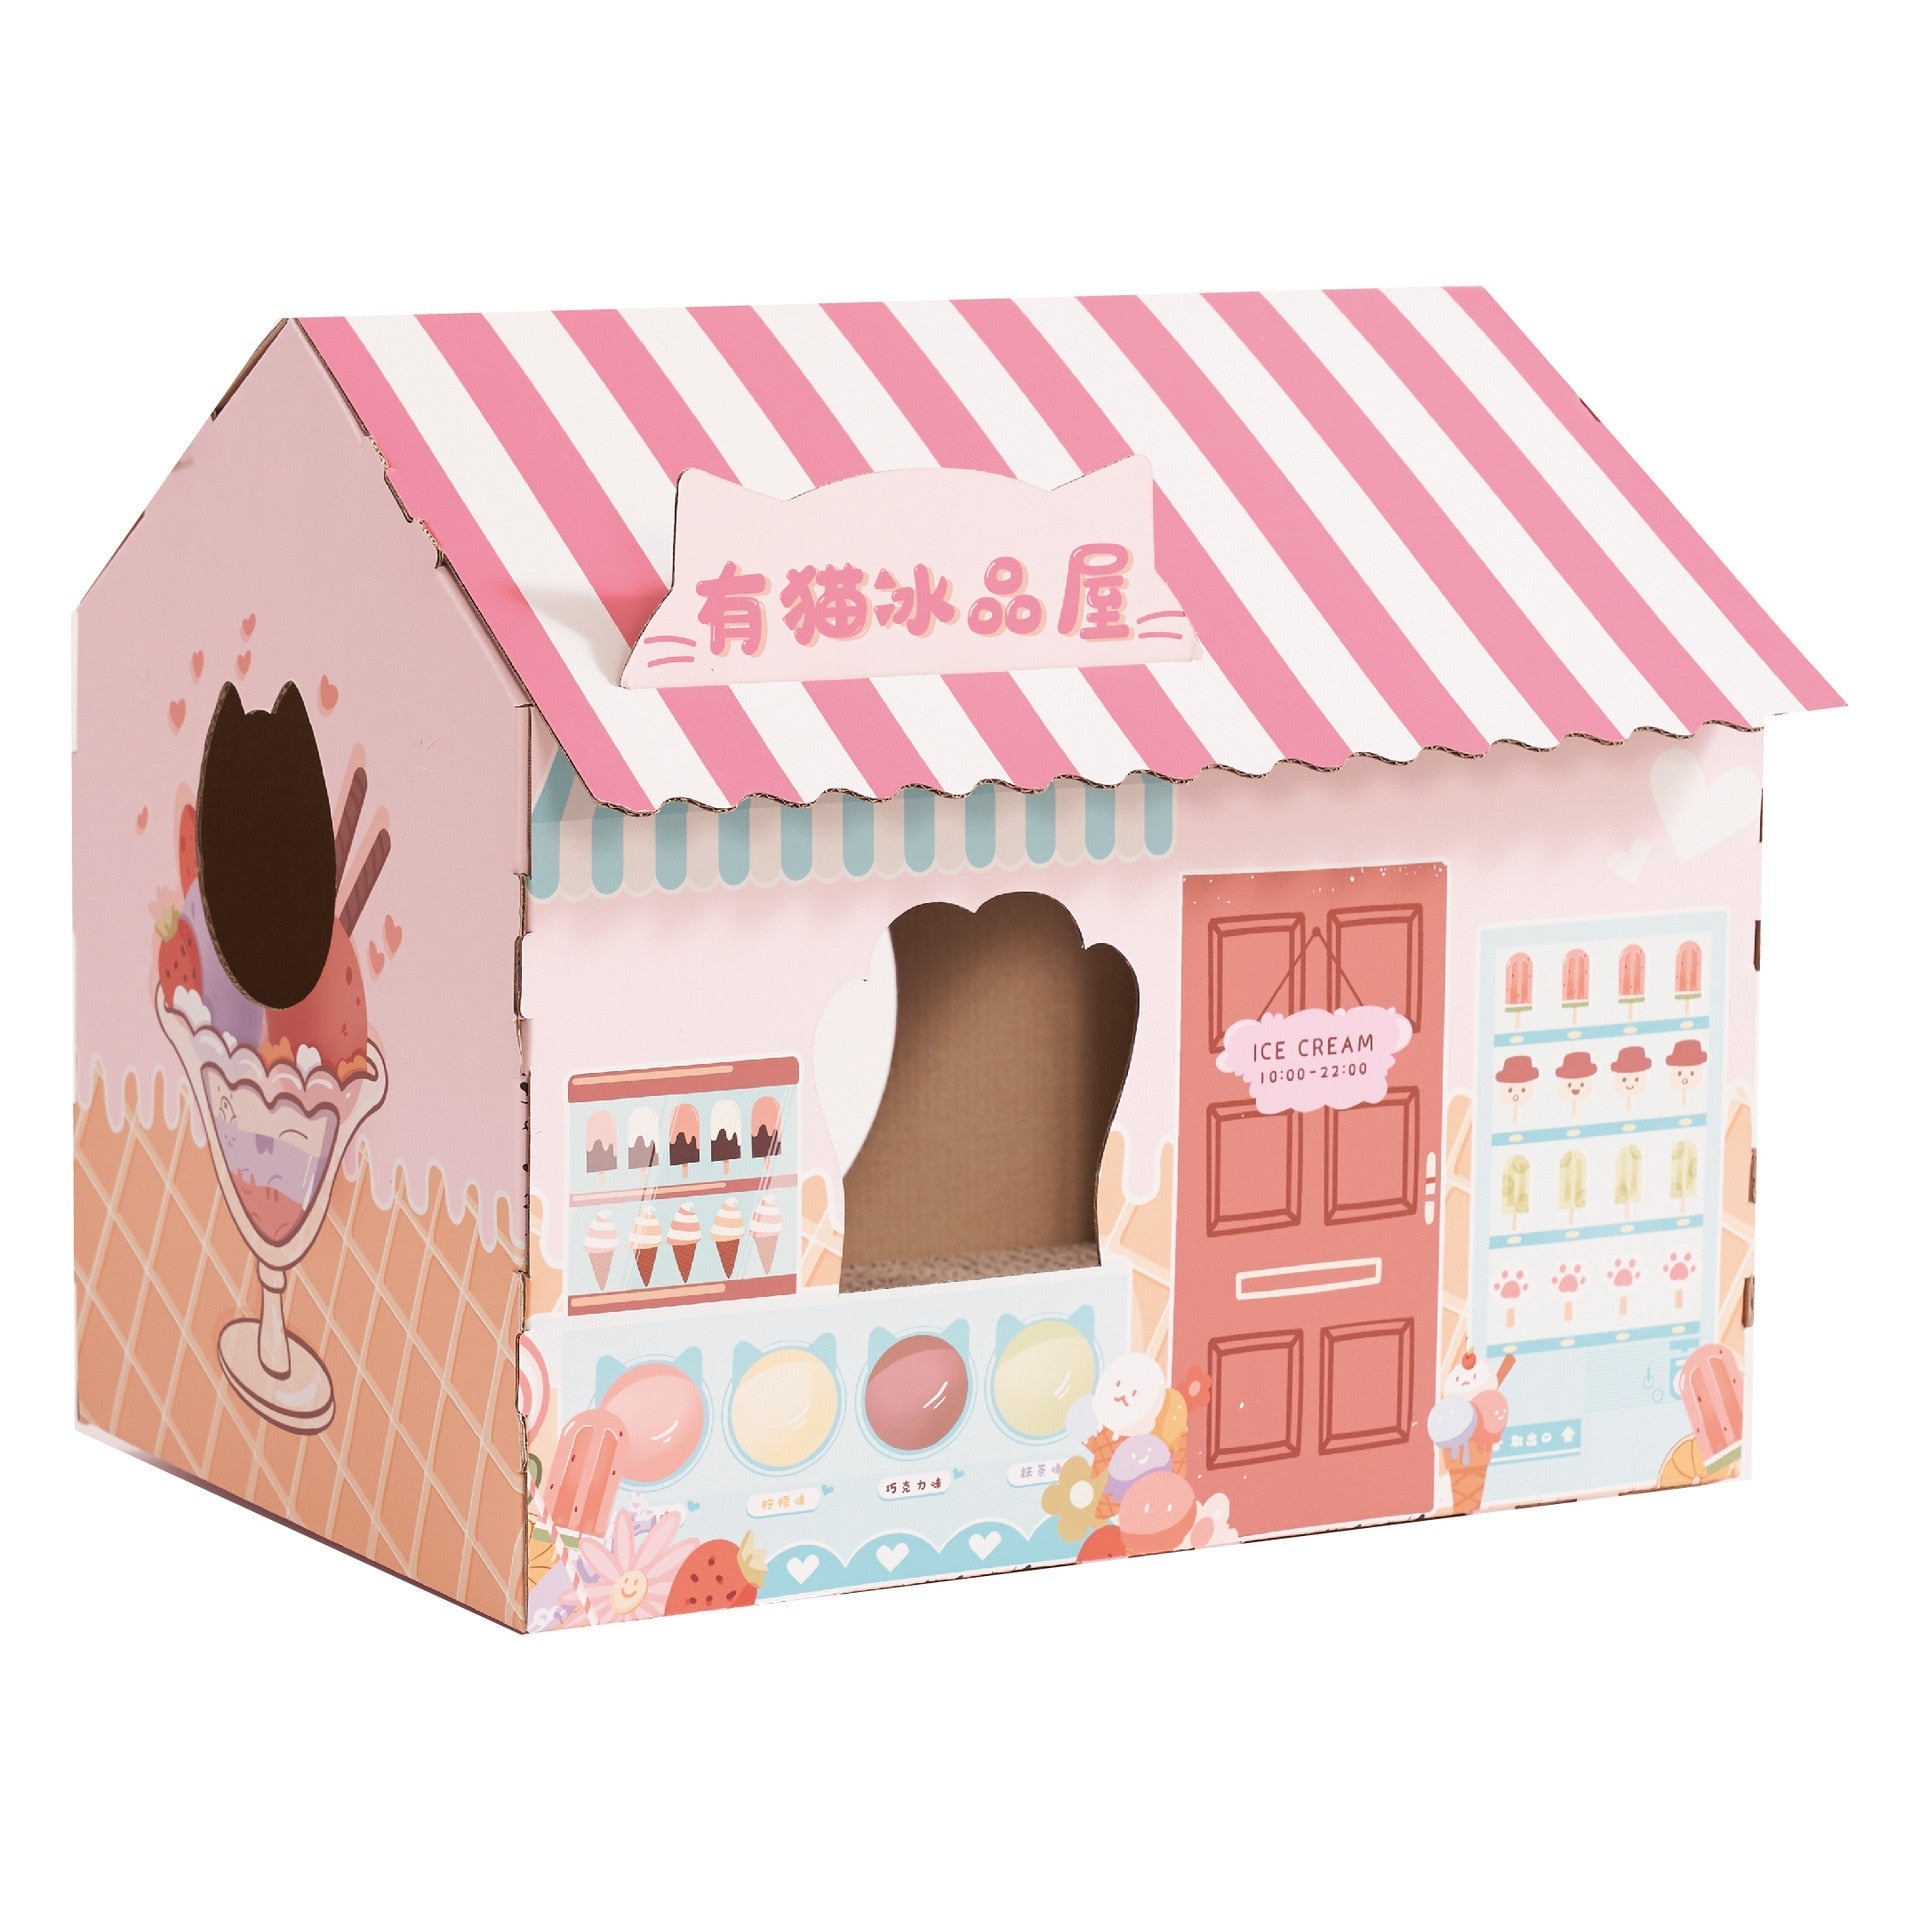 Cardboard Cat Bed - Pink